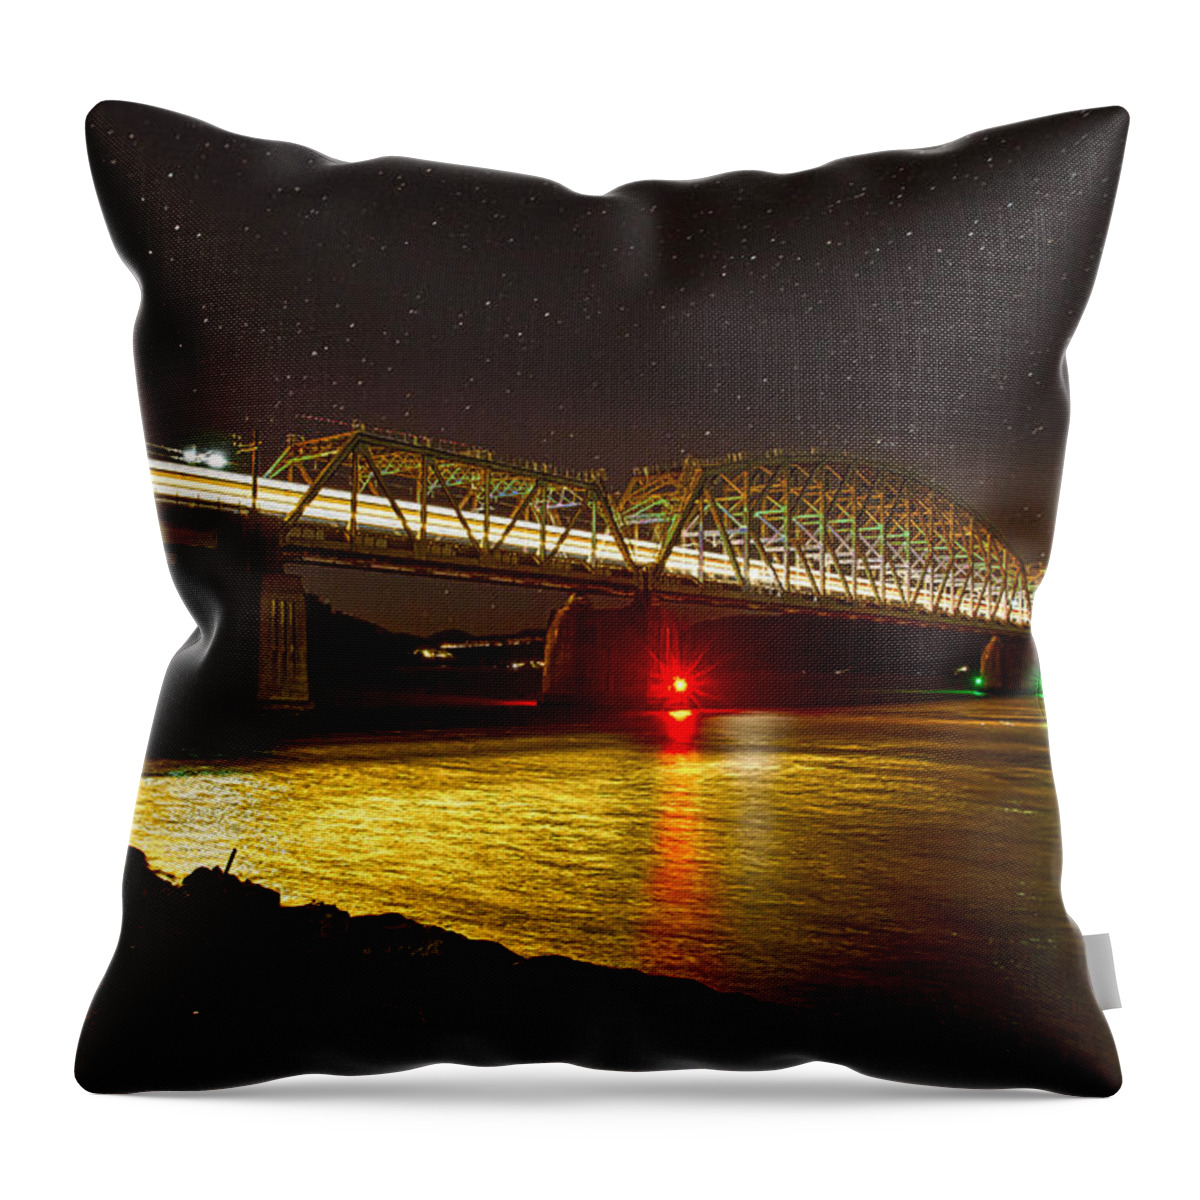 Hawkesbury River Railway Bridge Throw Pillow featuring the photograph Train lights in the night by Miroslava Jurcik